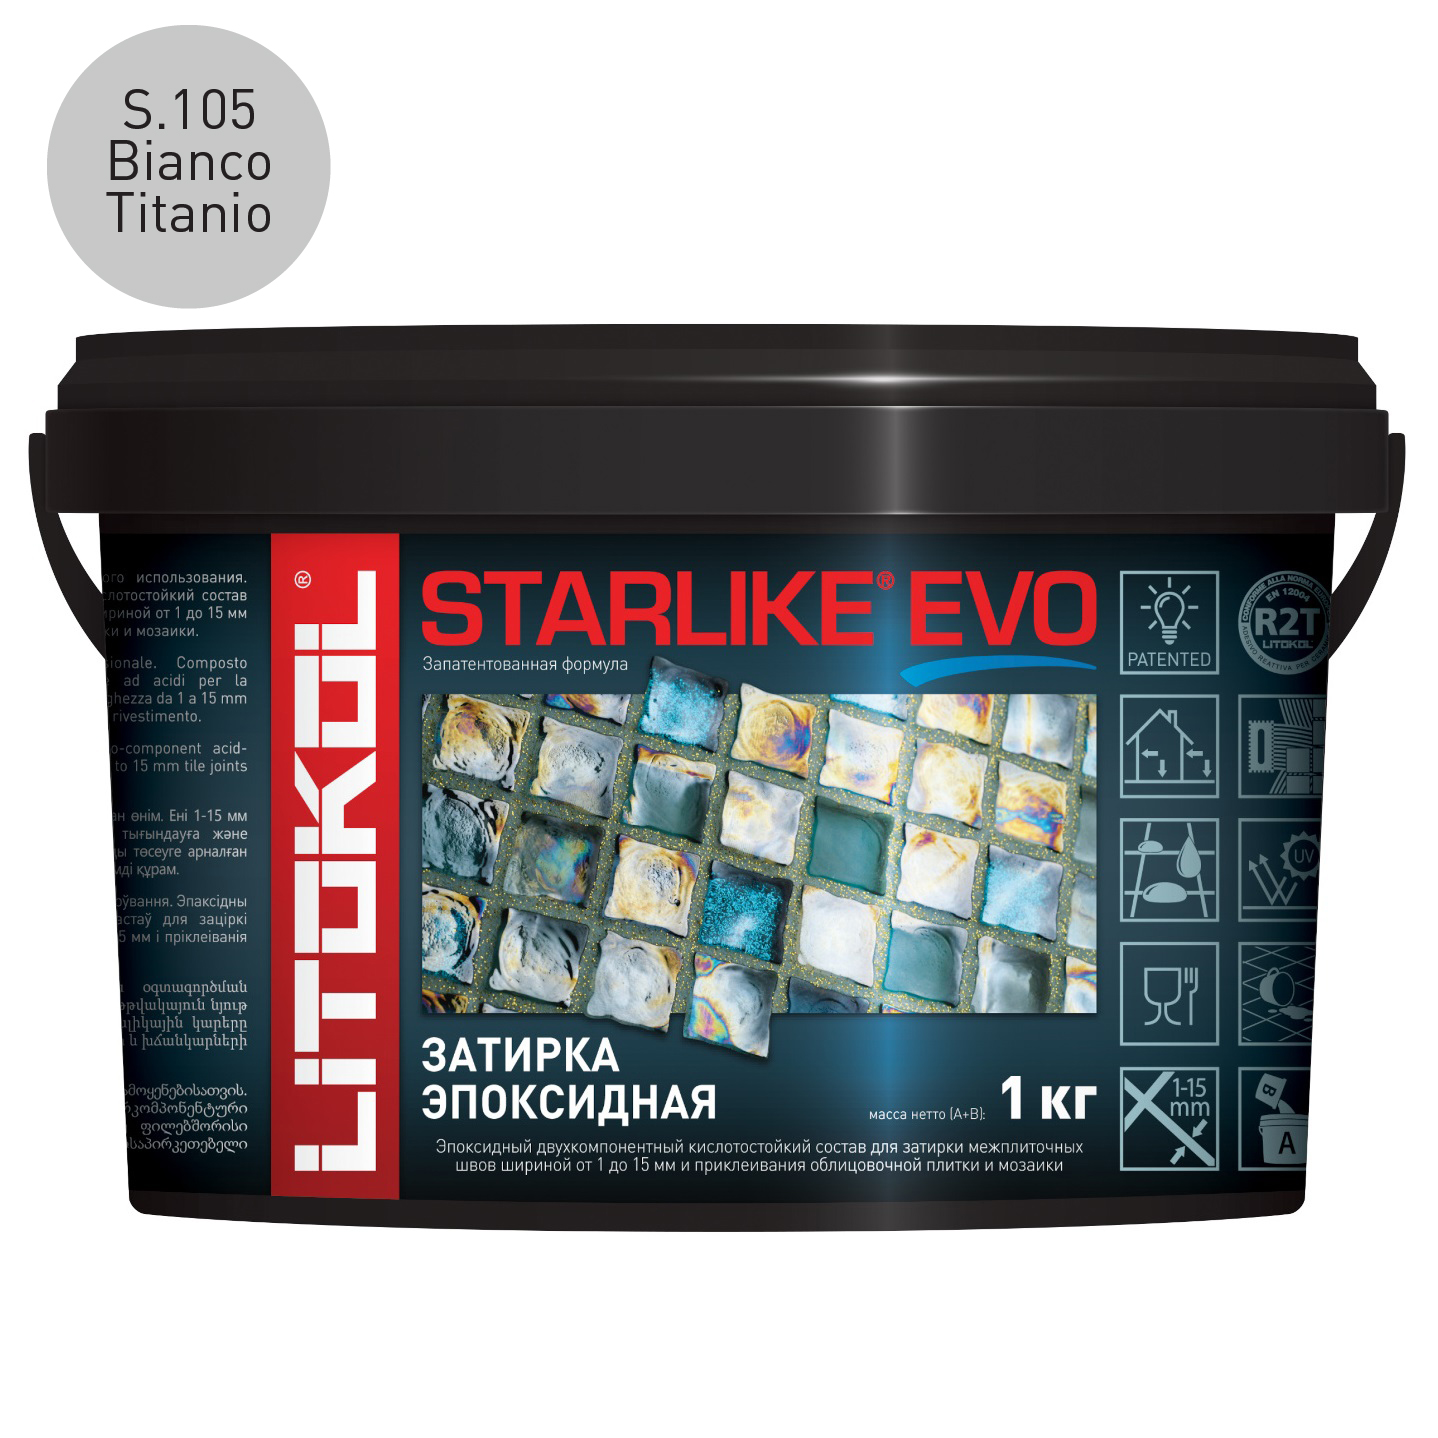 Затирка эпоксидная Litokol Starlike Evo S.105 Bianco Titanio (1 кг.)